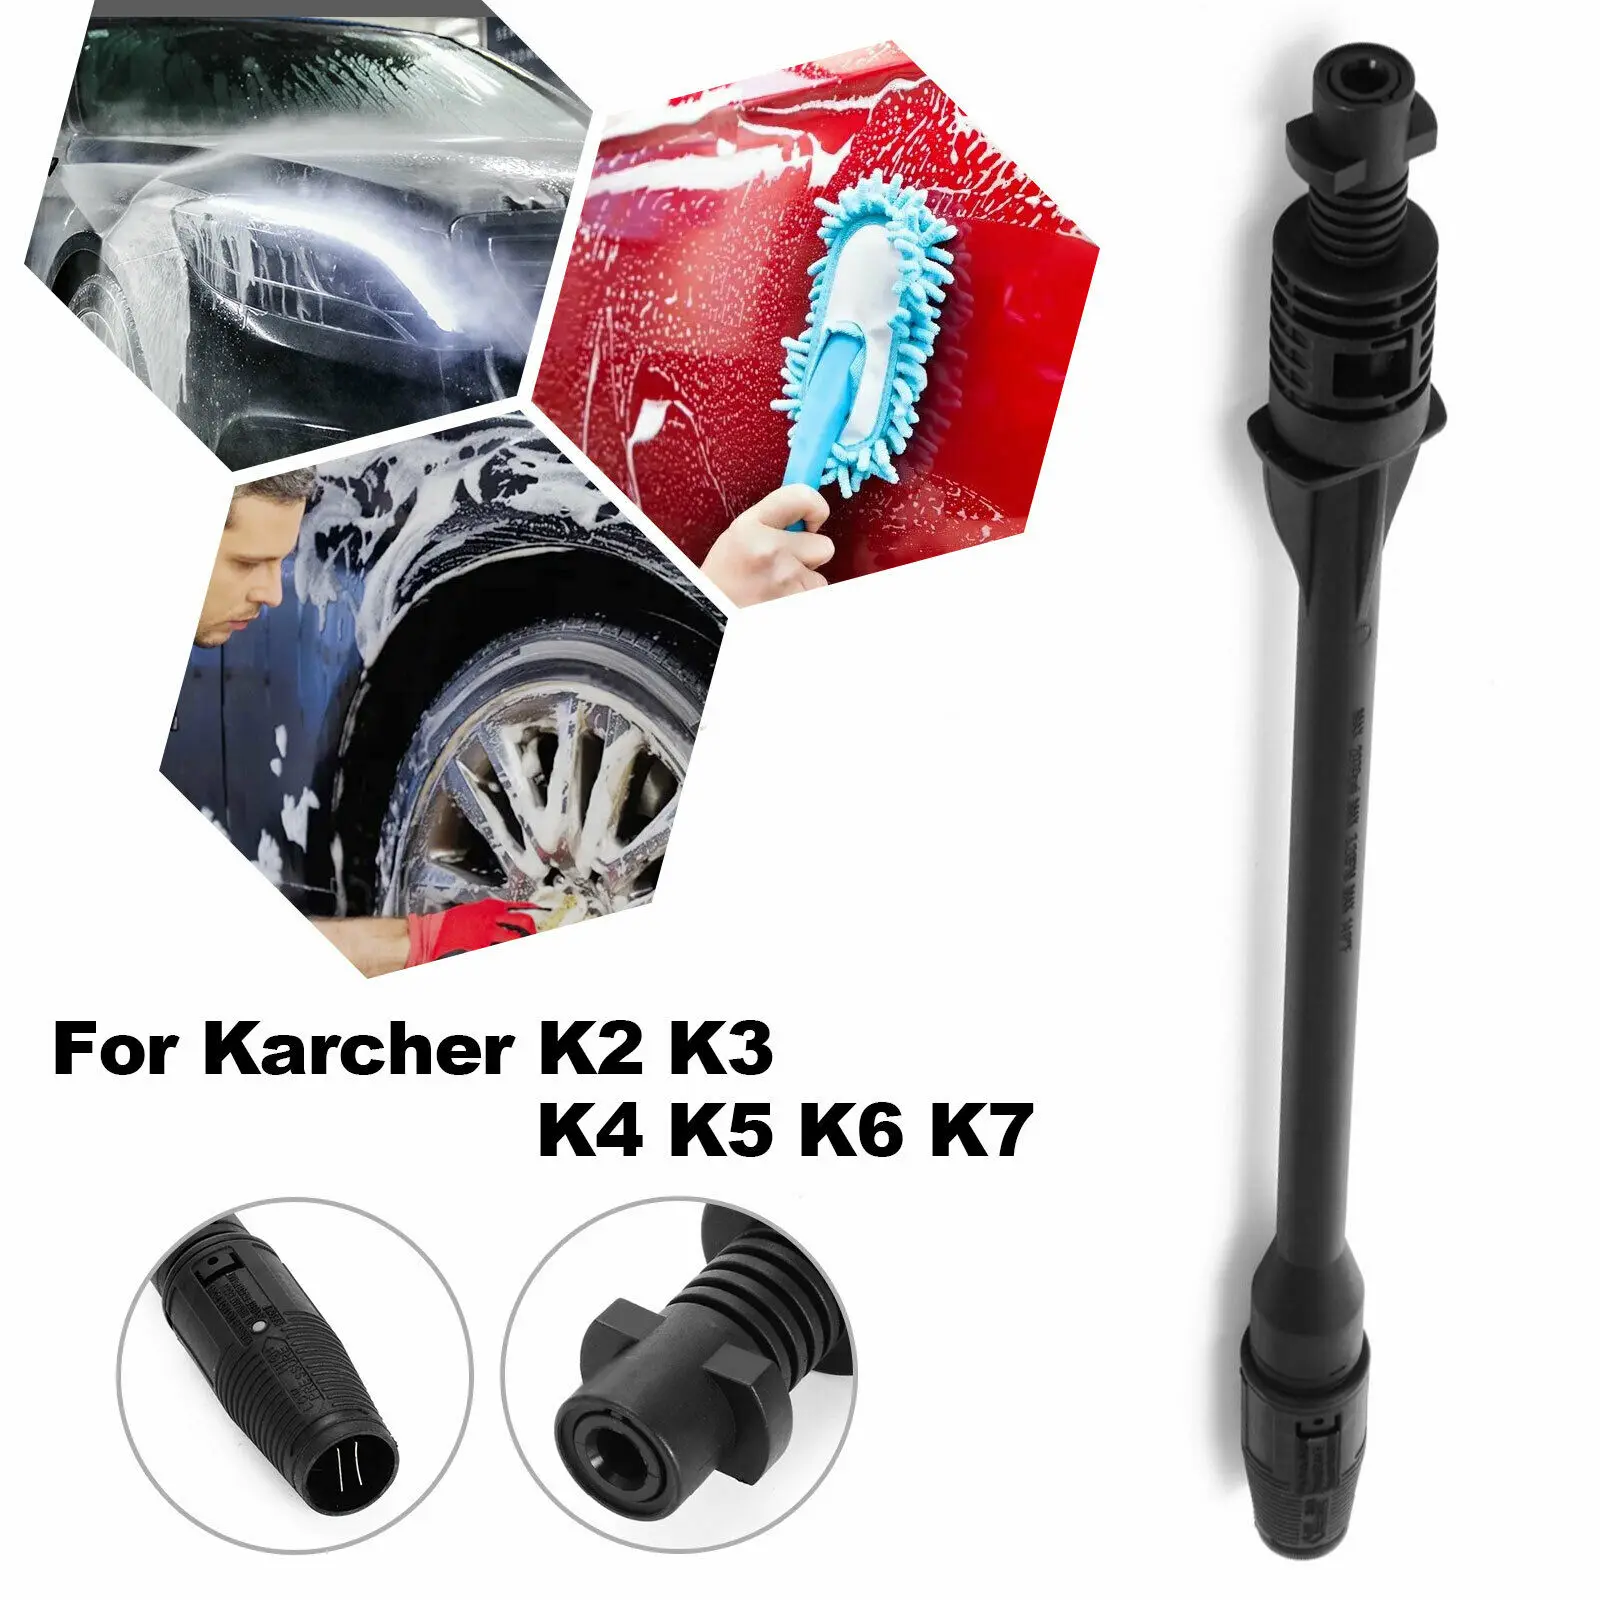 Spear Lance Nozzle For Karcher High Pressure Cleaner Adjustable Lance Nozzle Pressure Washer For Karcher K1 K2 K3 K4 K5 K6 K7 images - 6